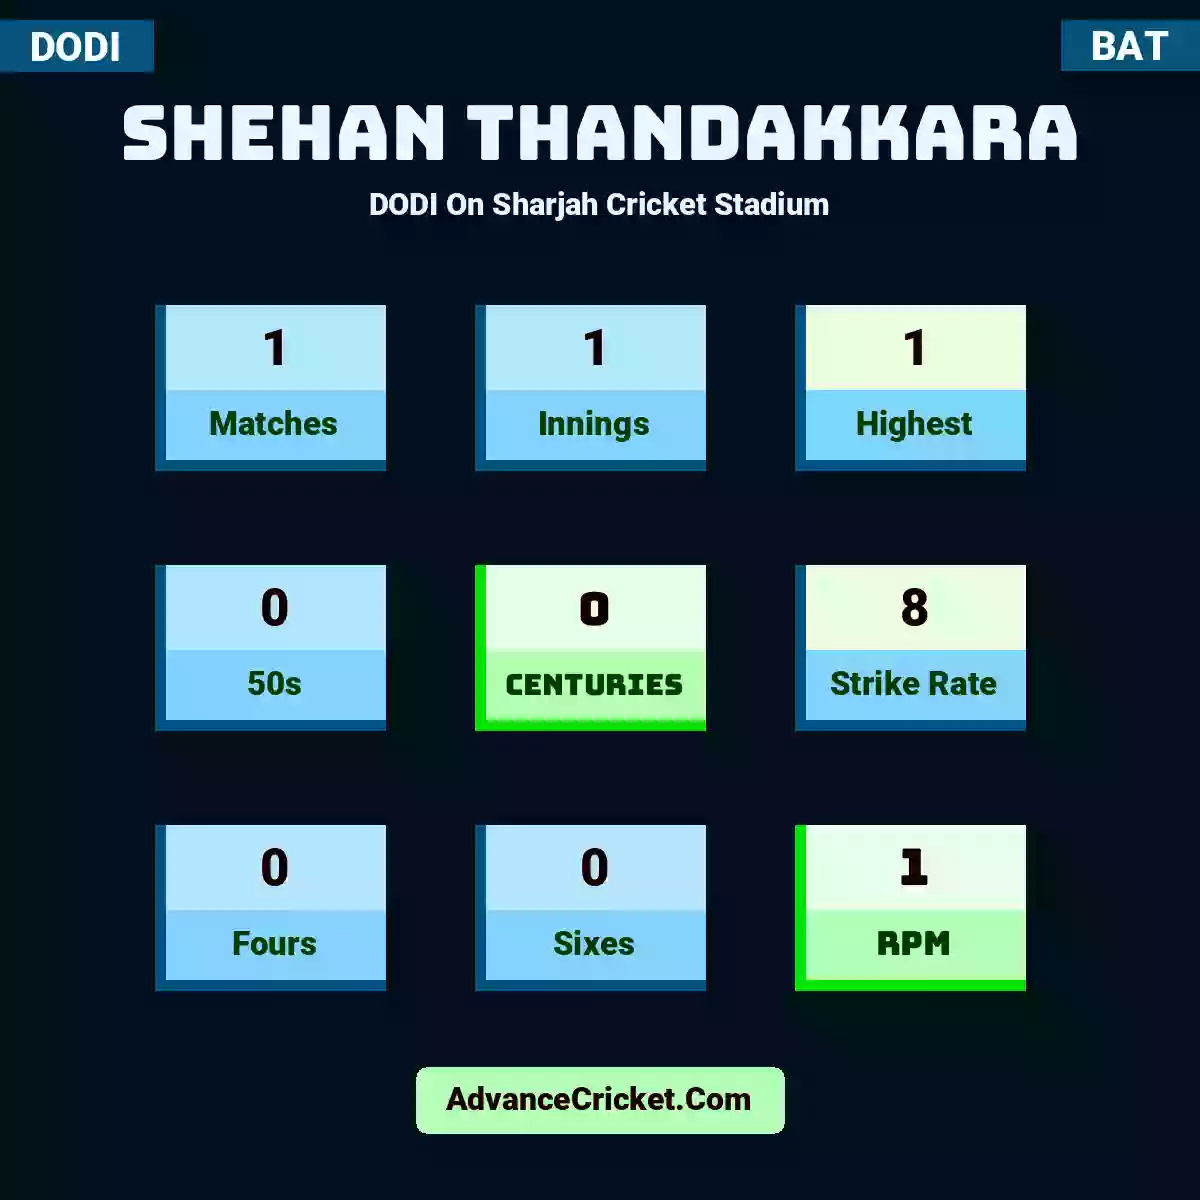 Shehan Thandakkara DODI  On Sharjah Cricket Stadium, Shehan Thandakkara played 1 matches, scored 1 runs as highest, 0 half-centuries, and 0 centuries, with a strike rate of 8. S.Thandakkara hit 0 fours and 0 sixes, with an RPM of 1.